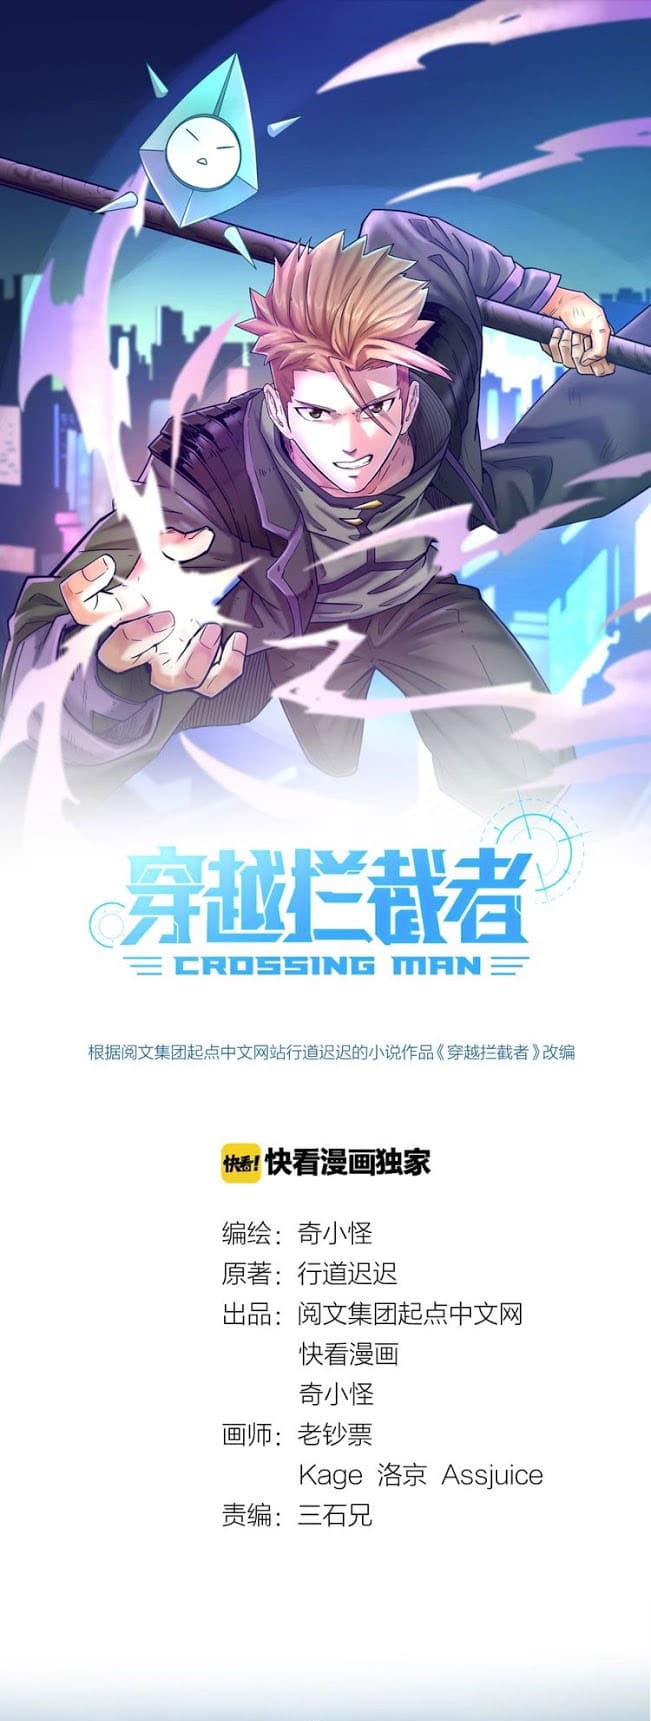 Crossing Man (ระบบ Cross interceptor) ตอนที่ 5 (1)